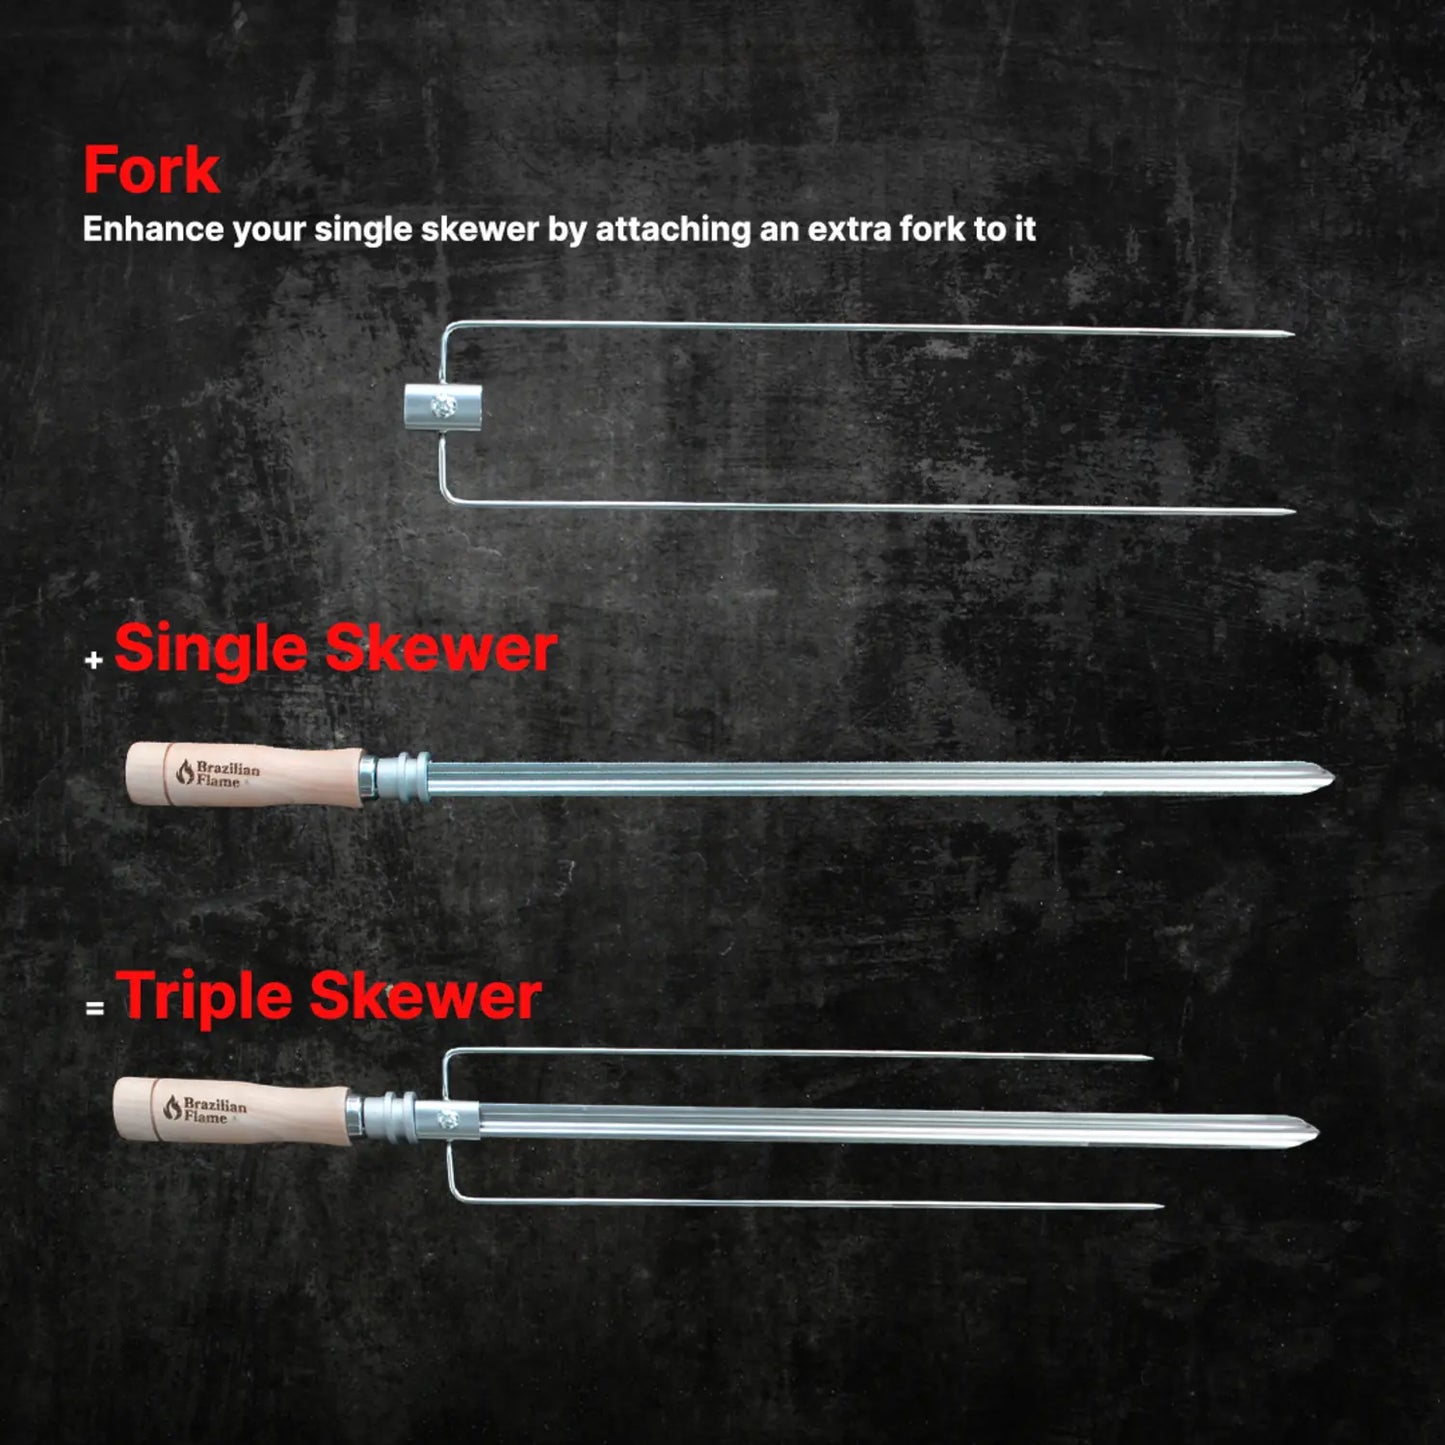 Brazilian Flame Fork for Single Skewer